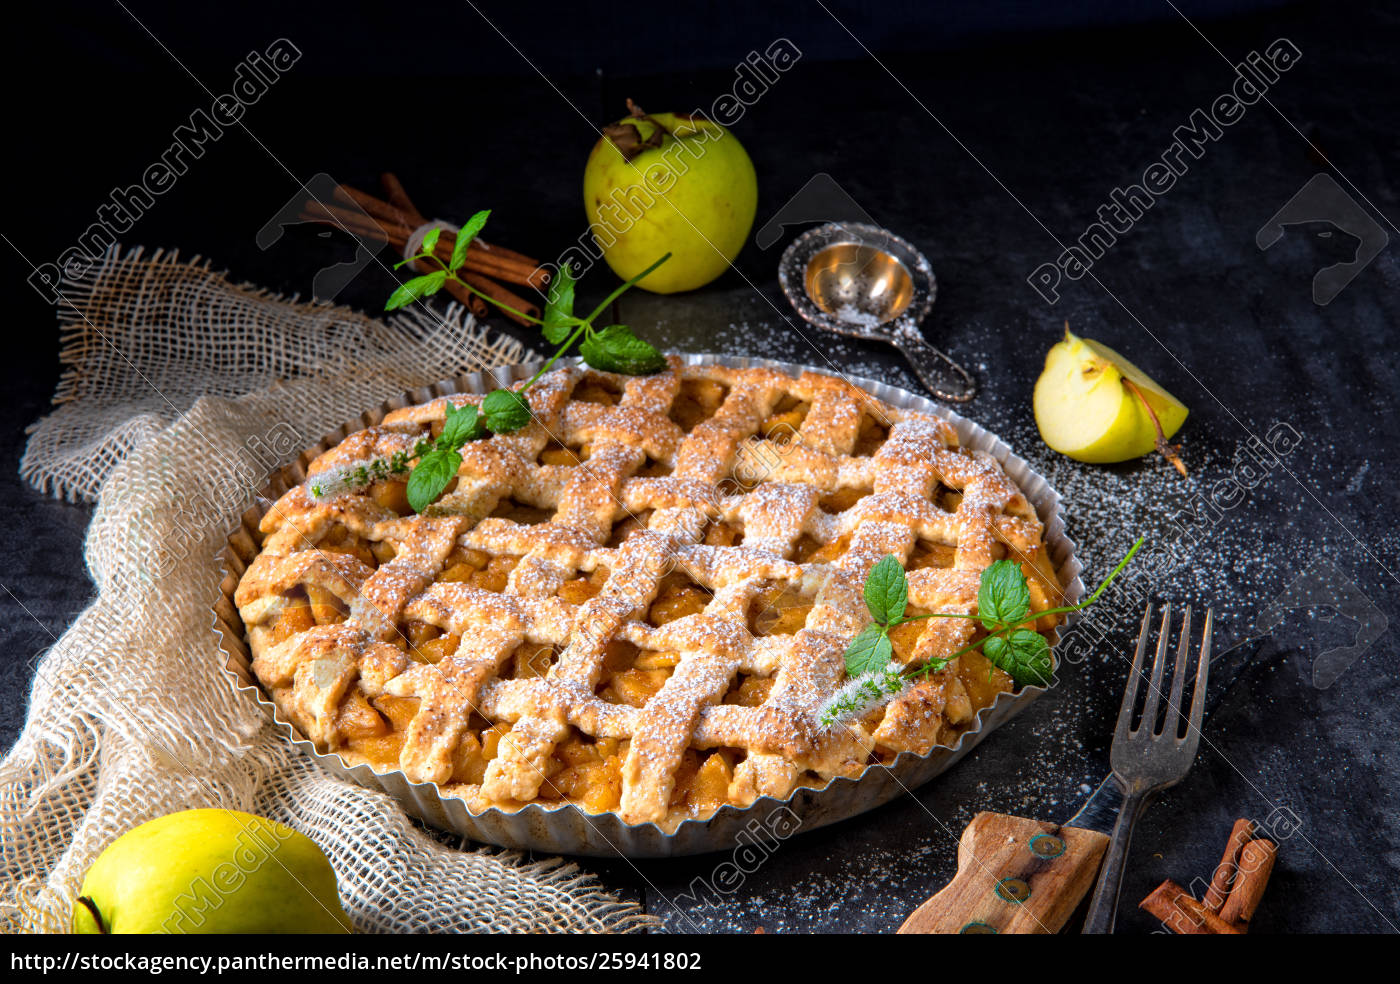 Leckerer Apfelkuchen mit Gitter obere Kruste - Stock Photo - #25941802 ...